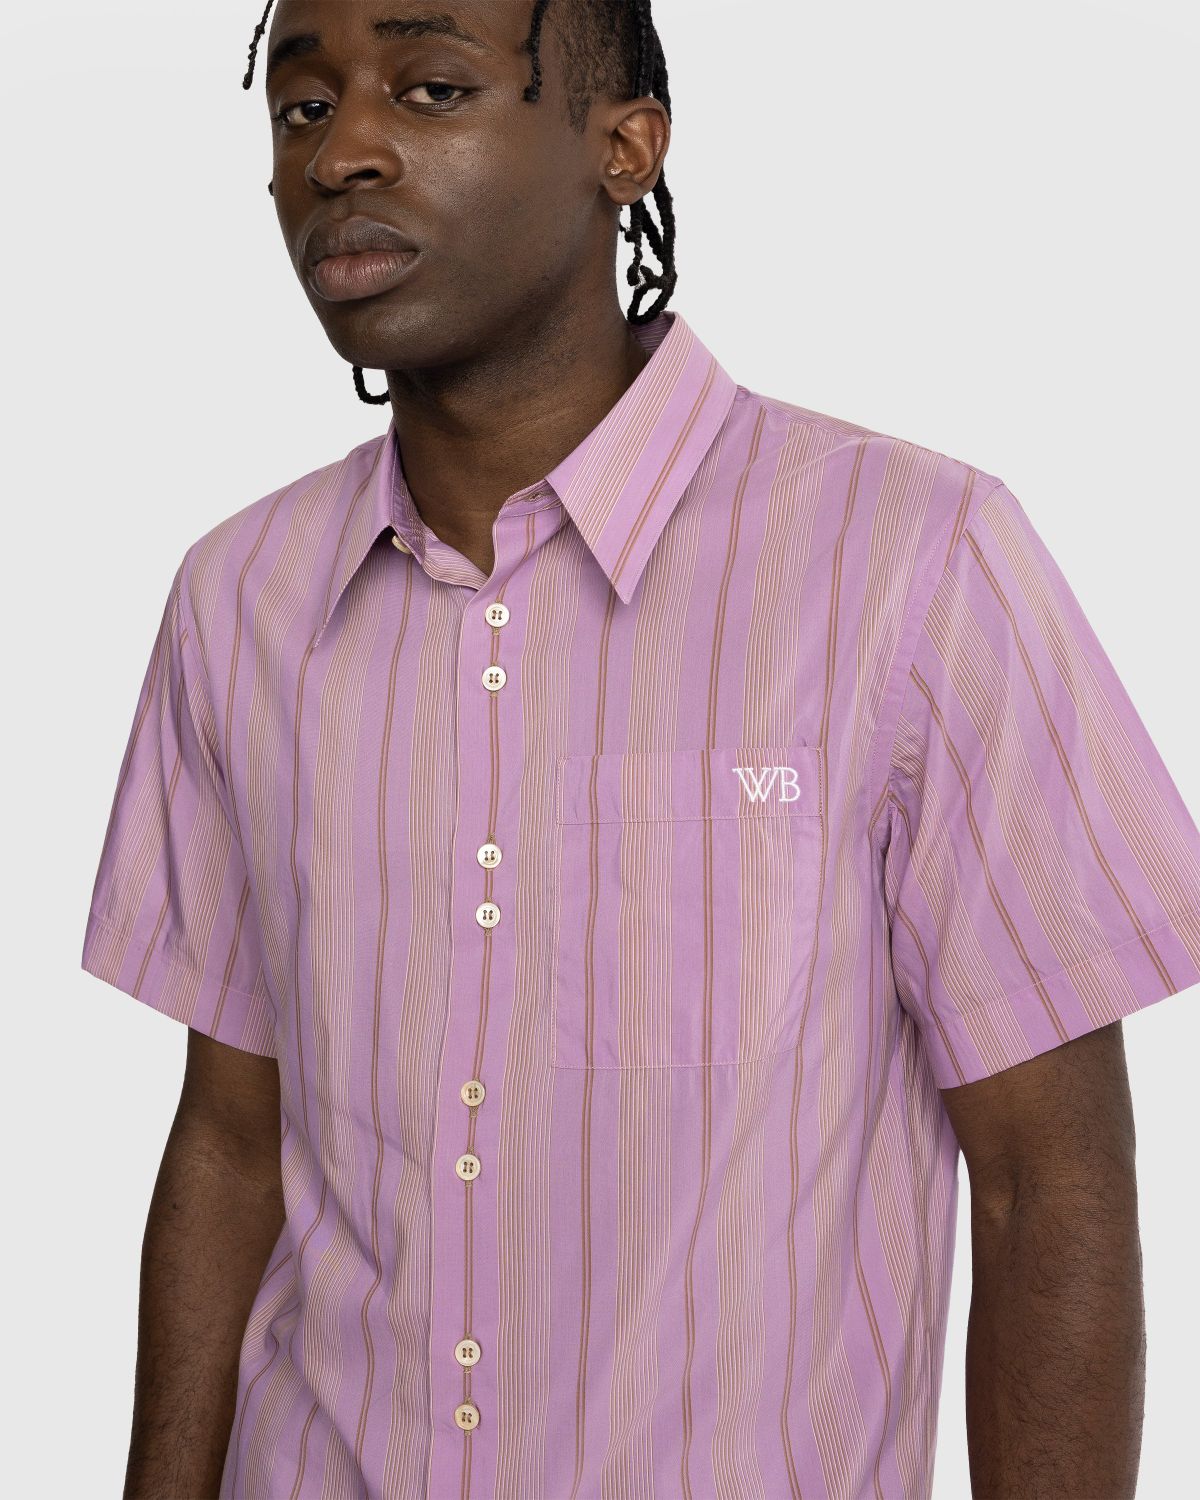 Wales Bonner – Rhythm Striped Shirt Pink | Highsnobiety Shop